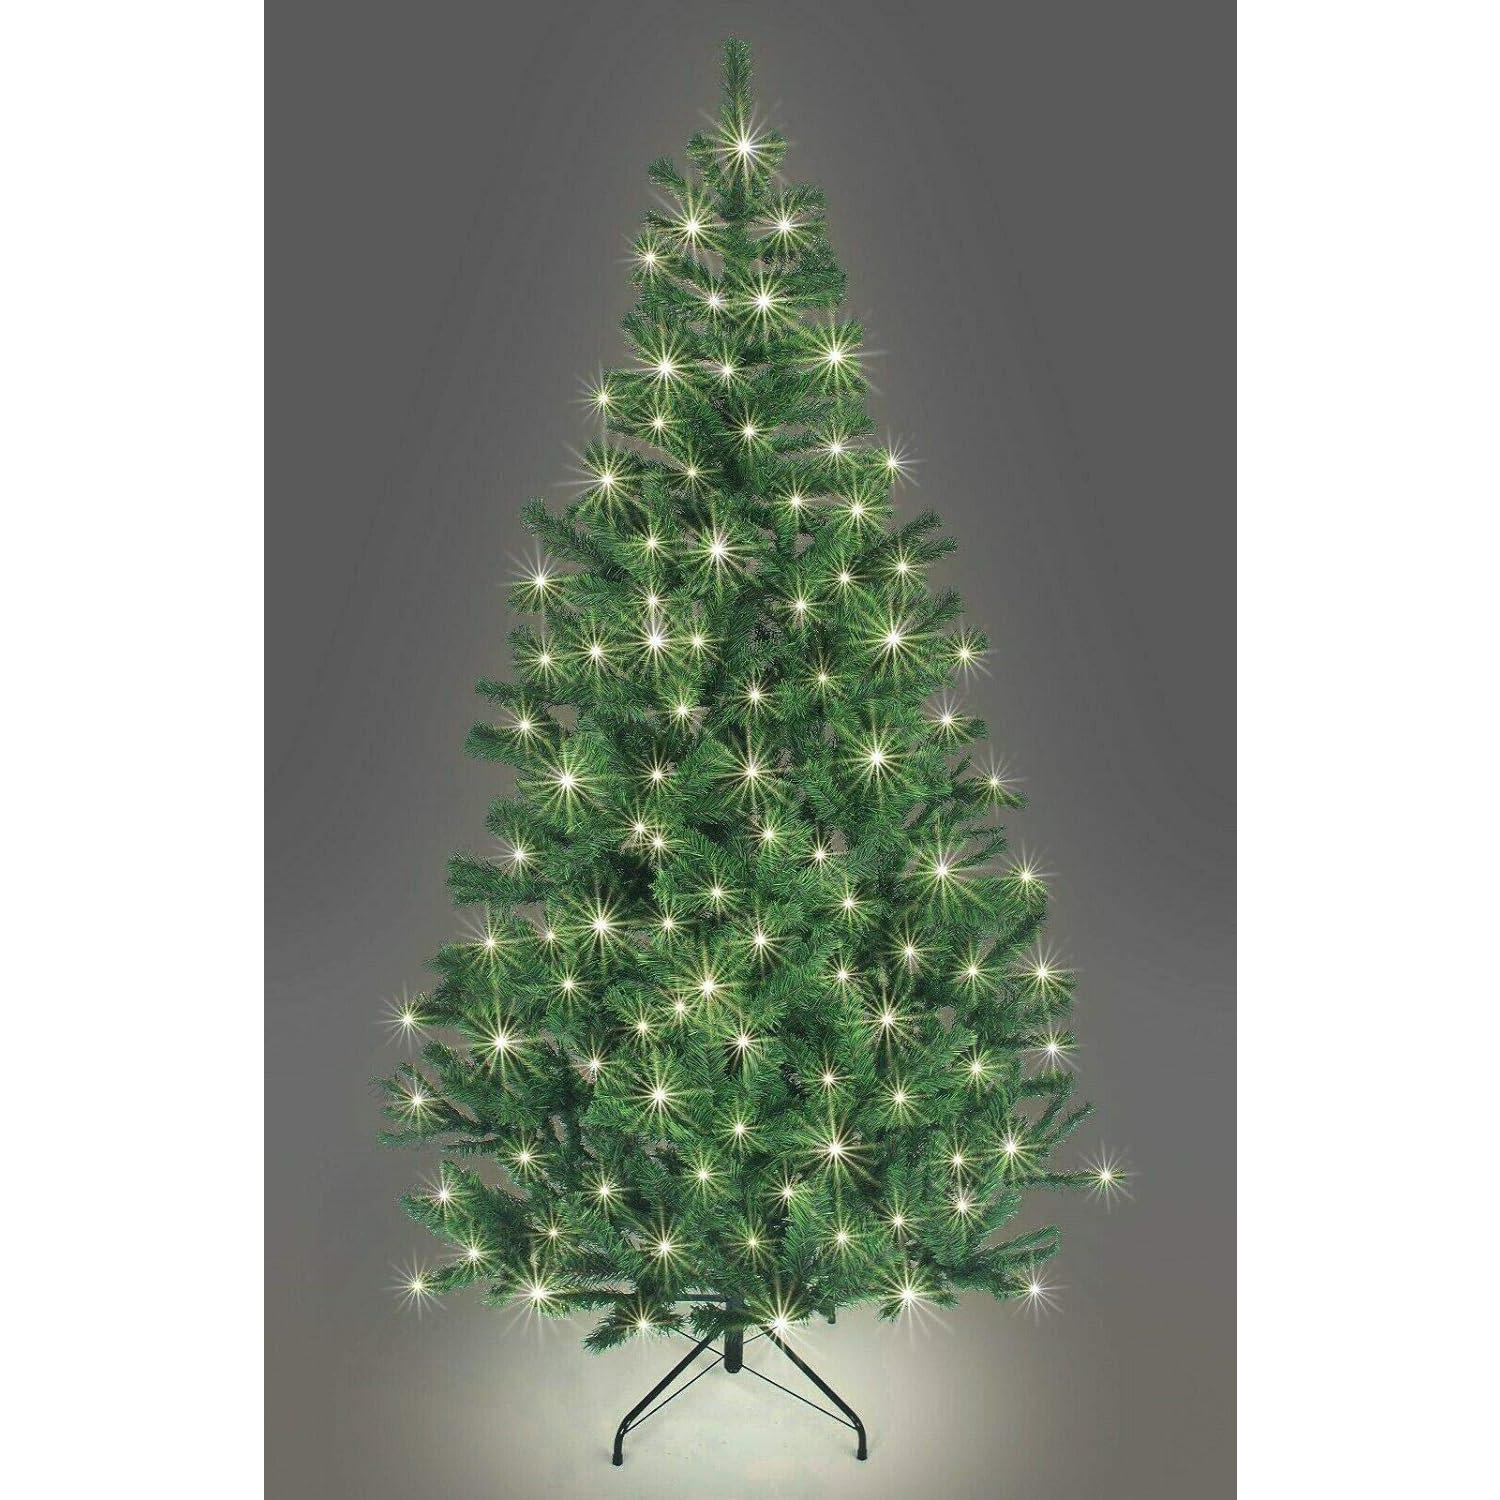 12FT Prelit Green Alaskan Pine Christmas Tree Warm White LEDs - image 1